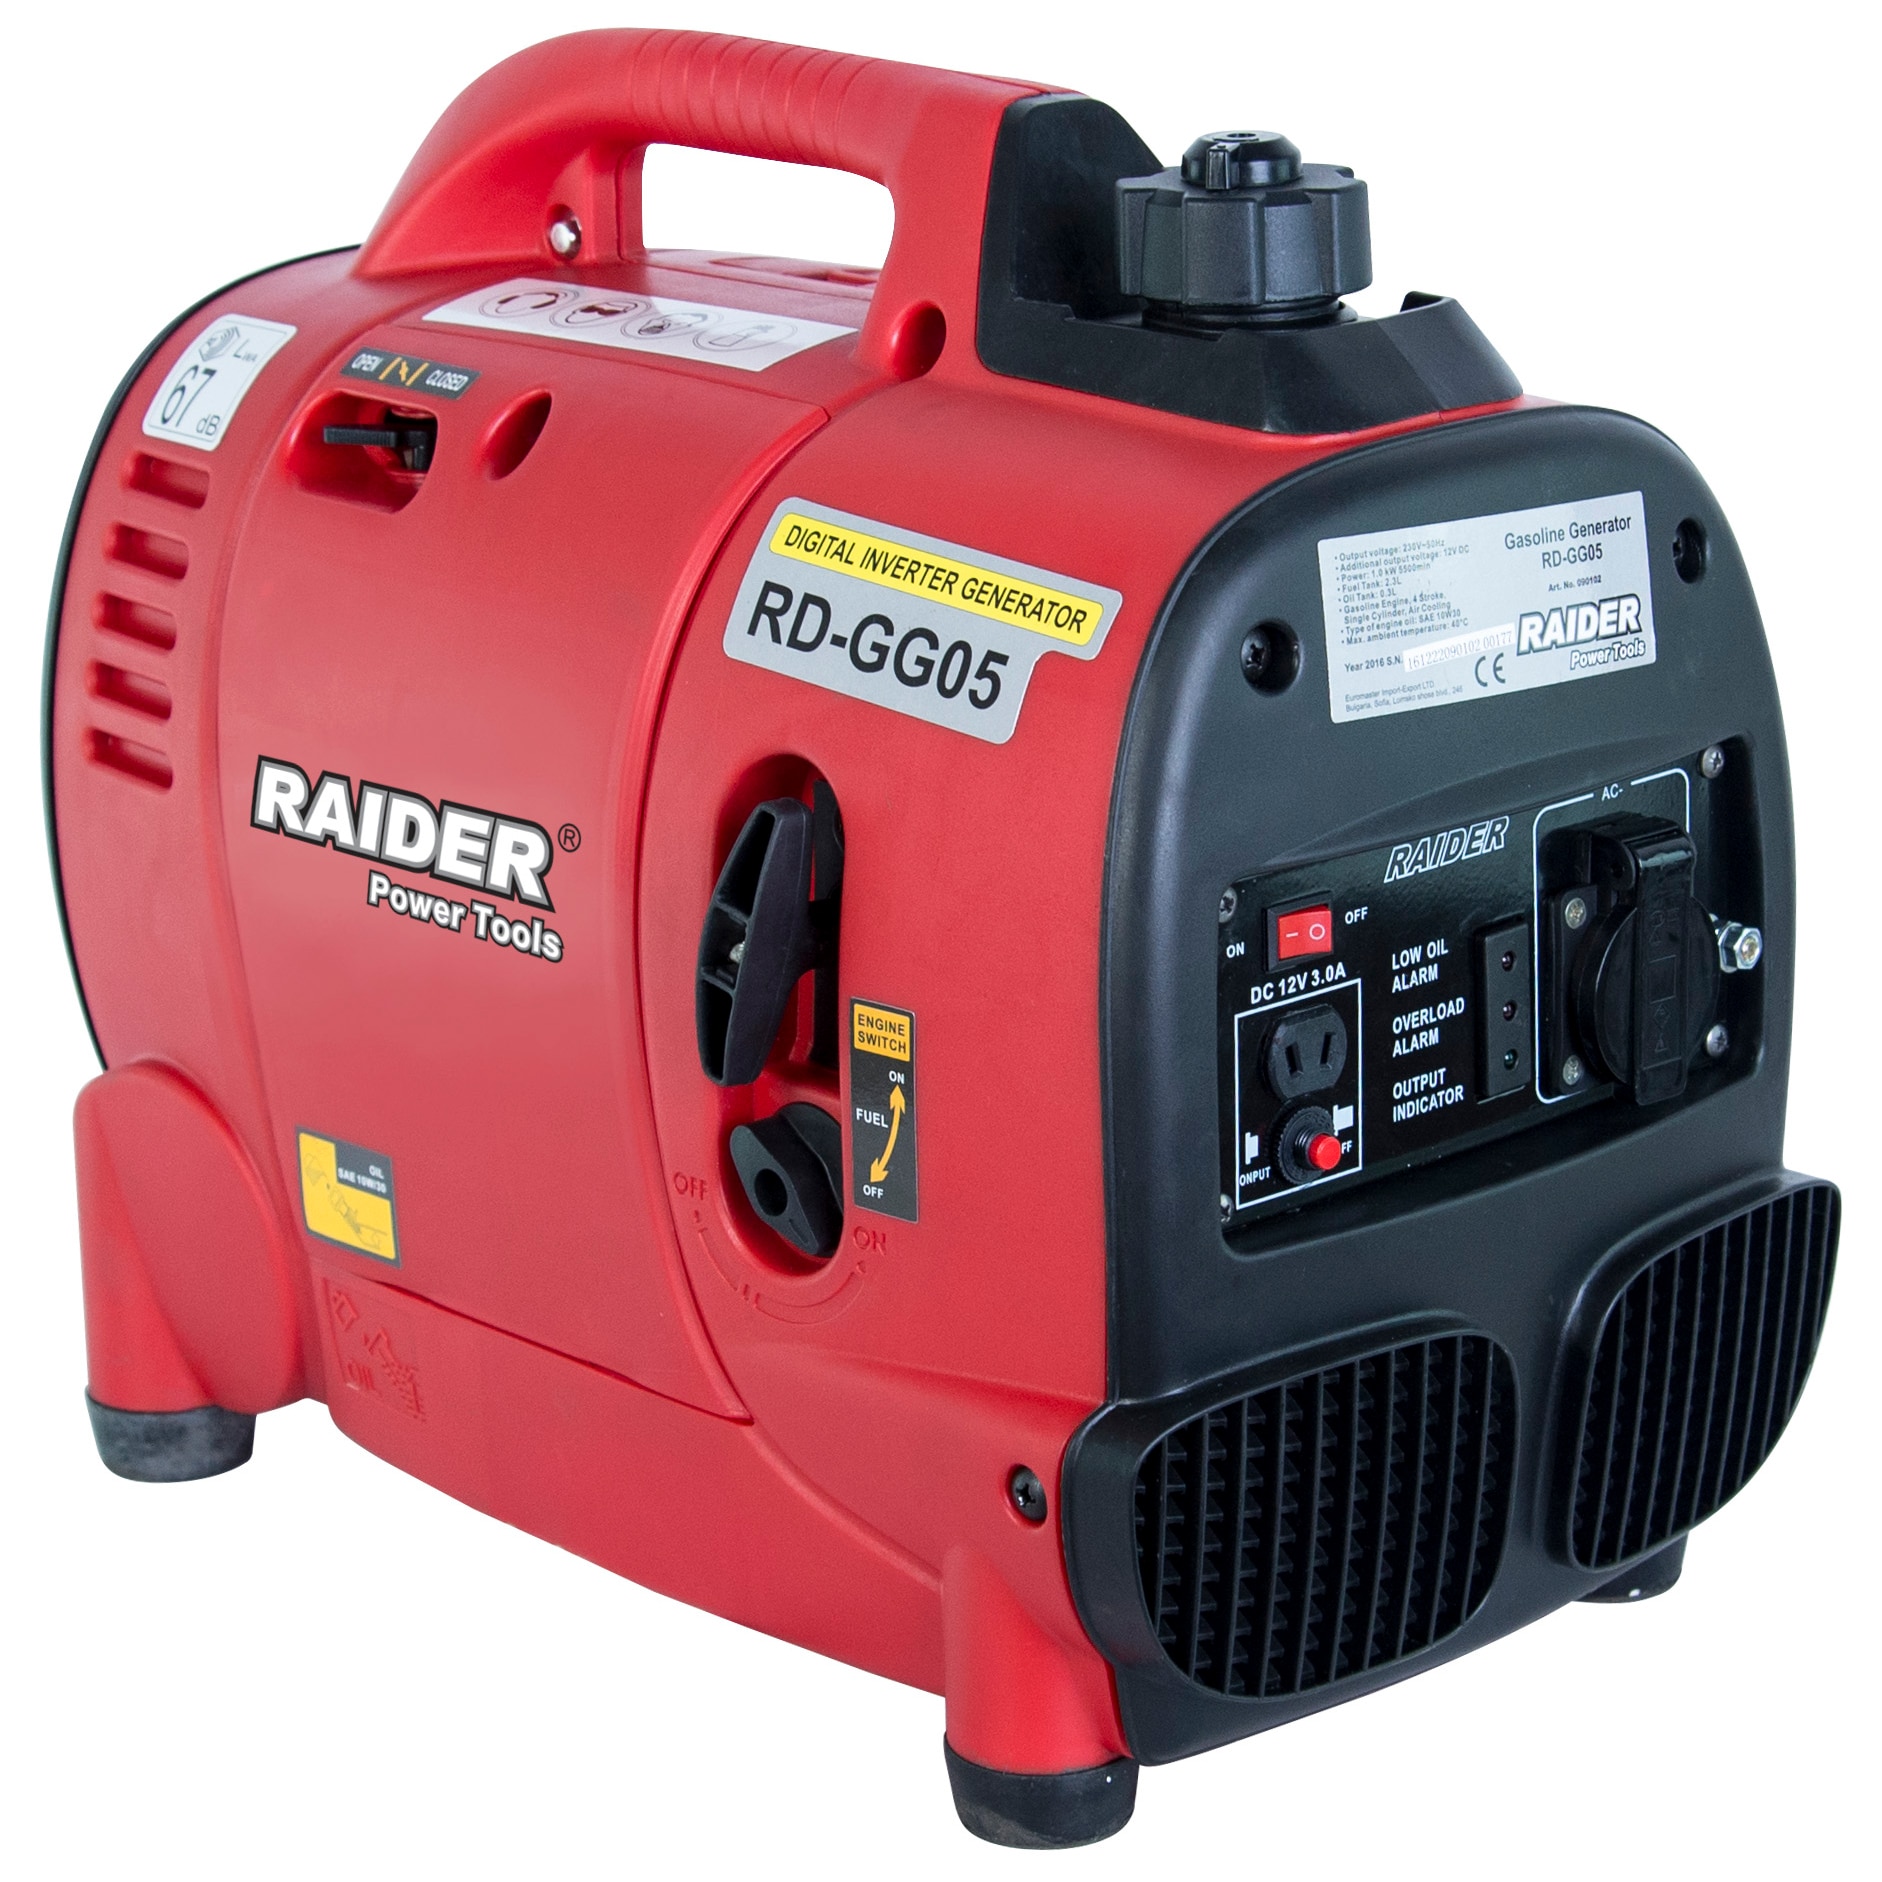 Generator curent electric Raider RD-GG05, 1000 W, 4 timp, insonorizat .